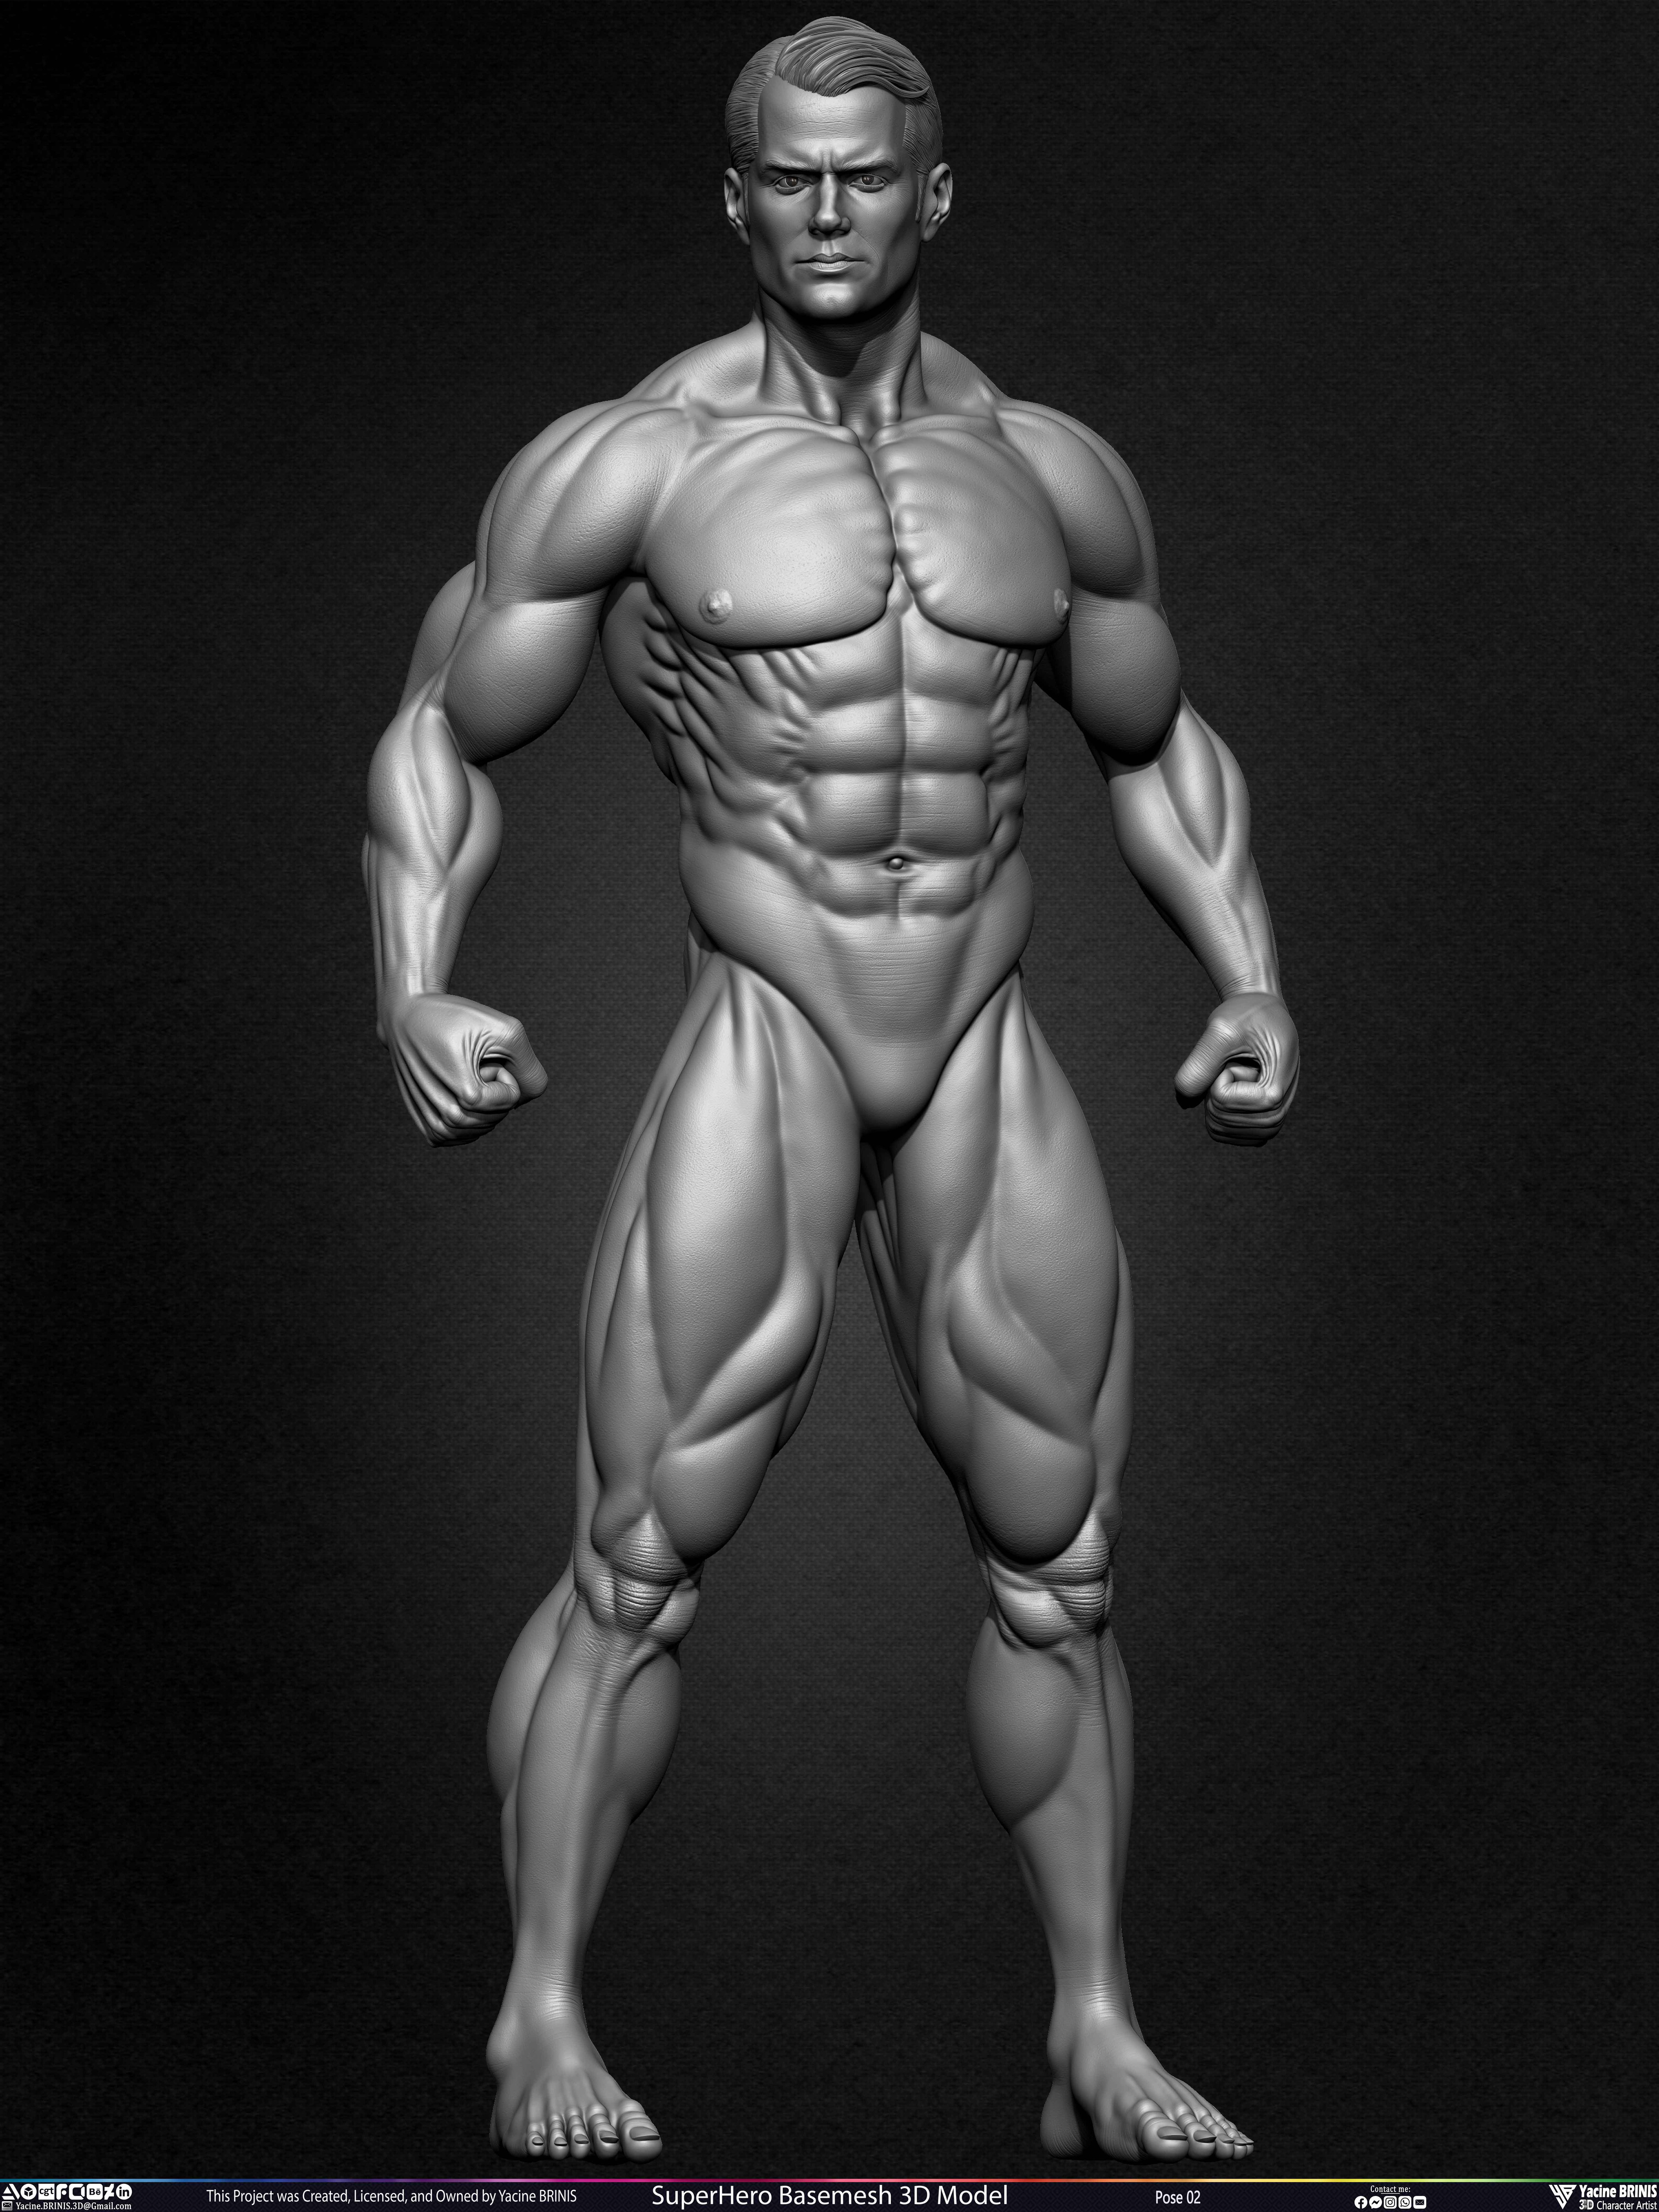 Super-Hero Basemesh 3D Model - Henry Cavill- Man of Steel - Superman - Pose 02 Sculpted by Yacine BRINIS Set 003